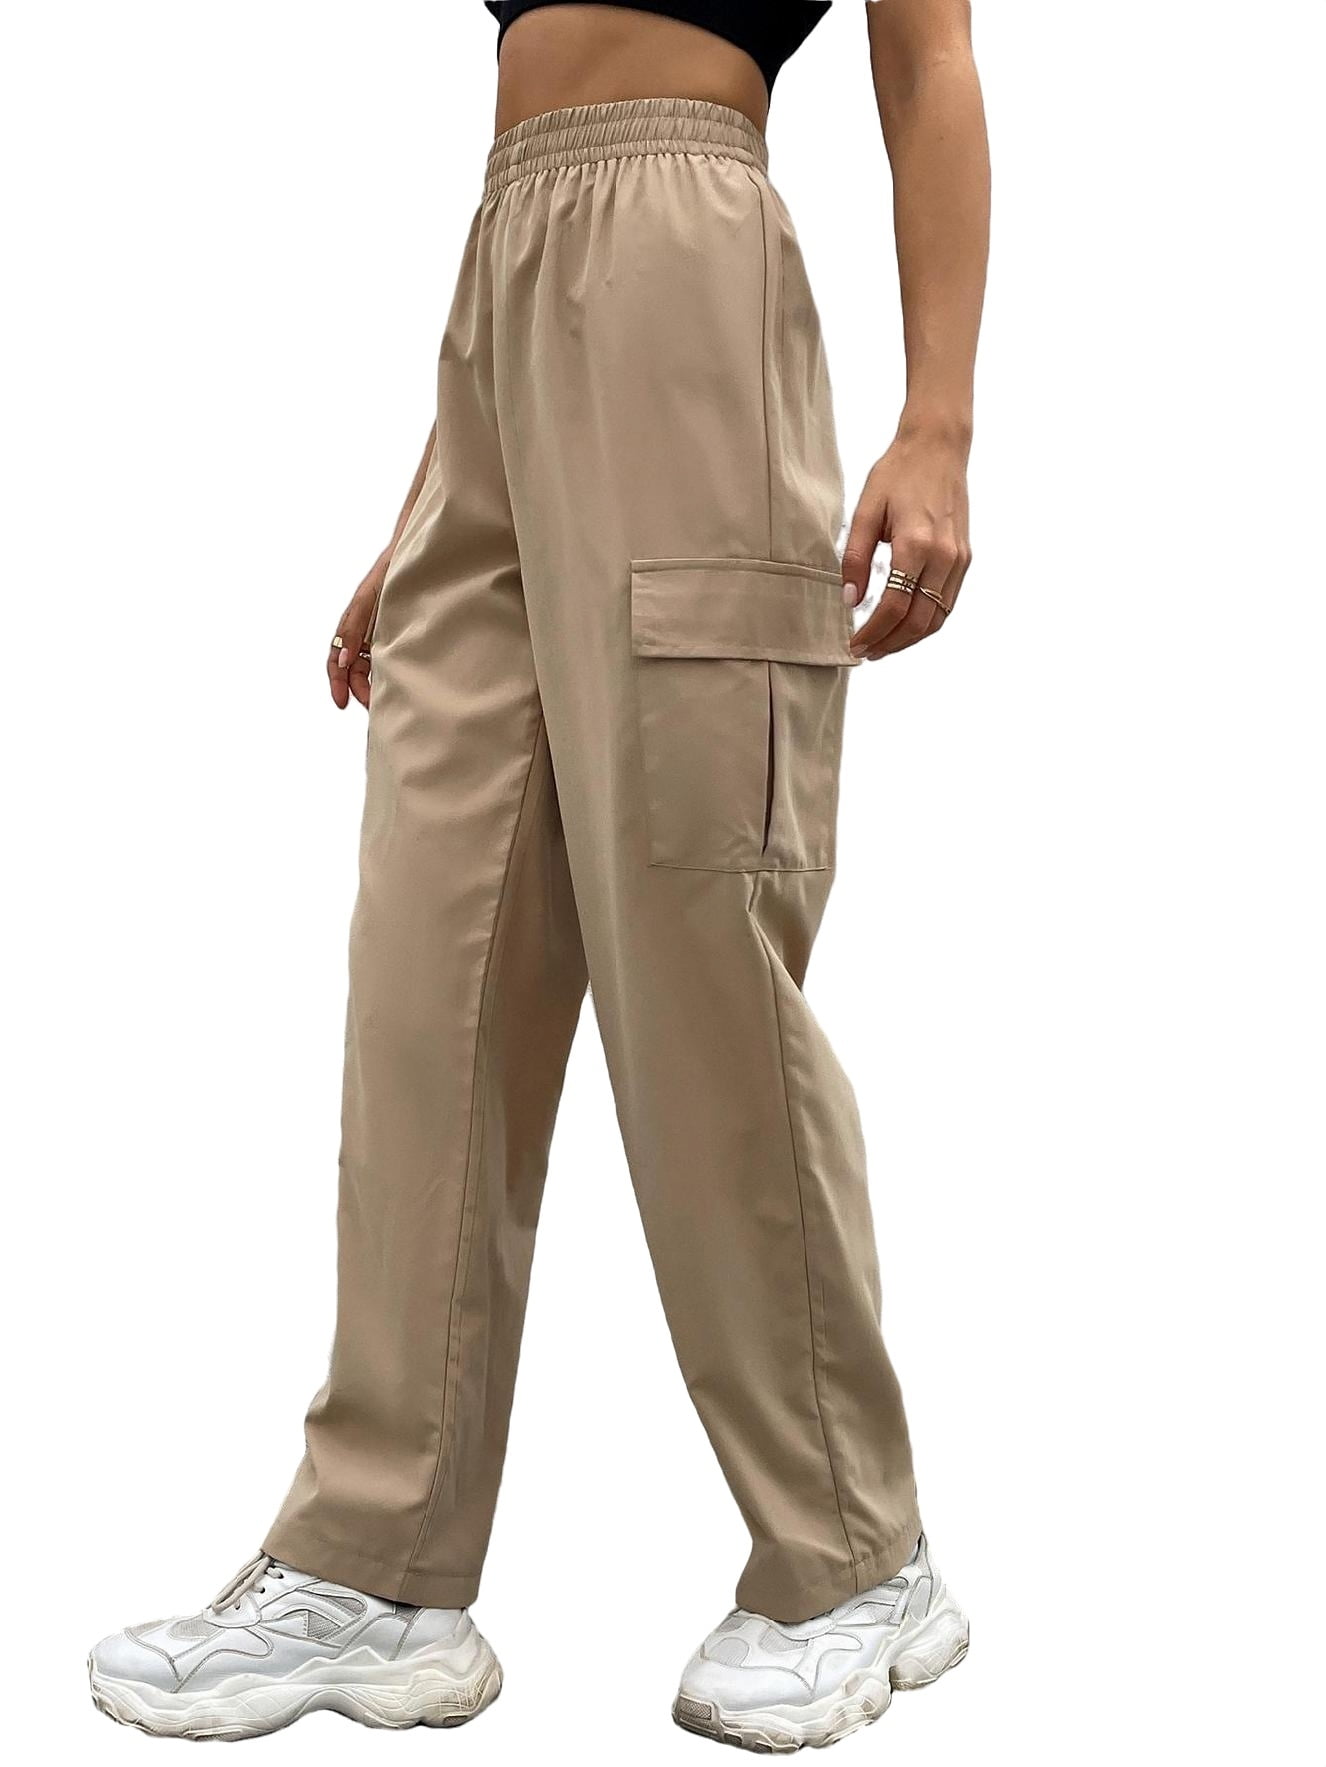 Women's Pants Solid High Waist Cargo Pants Khaki L - Walmart.com